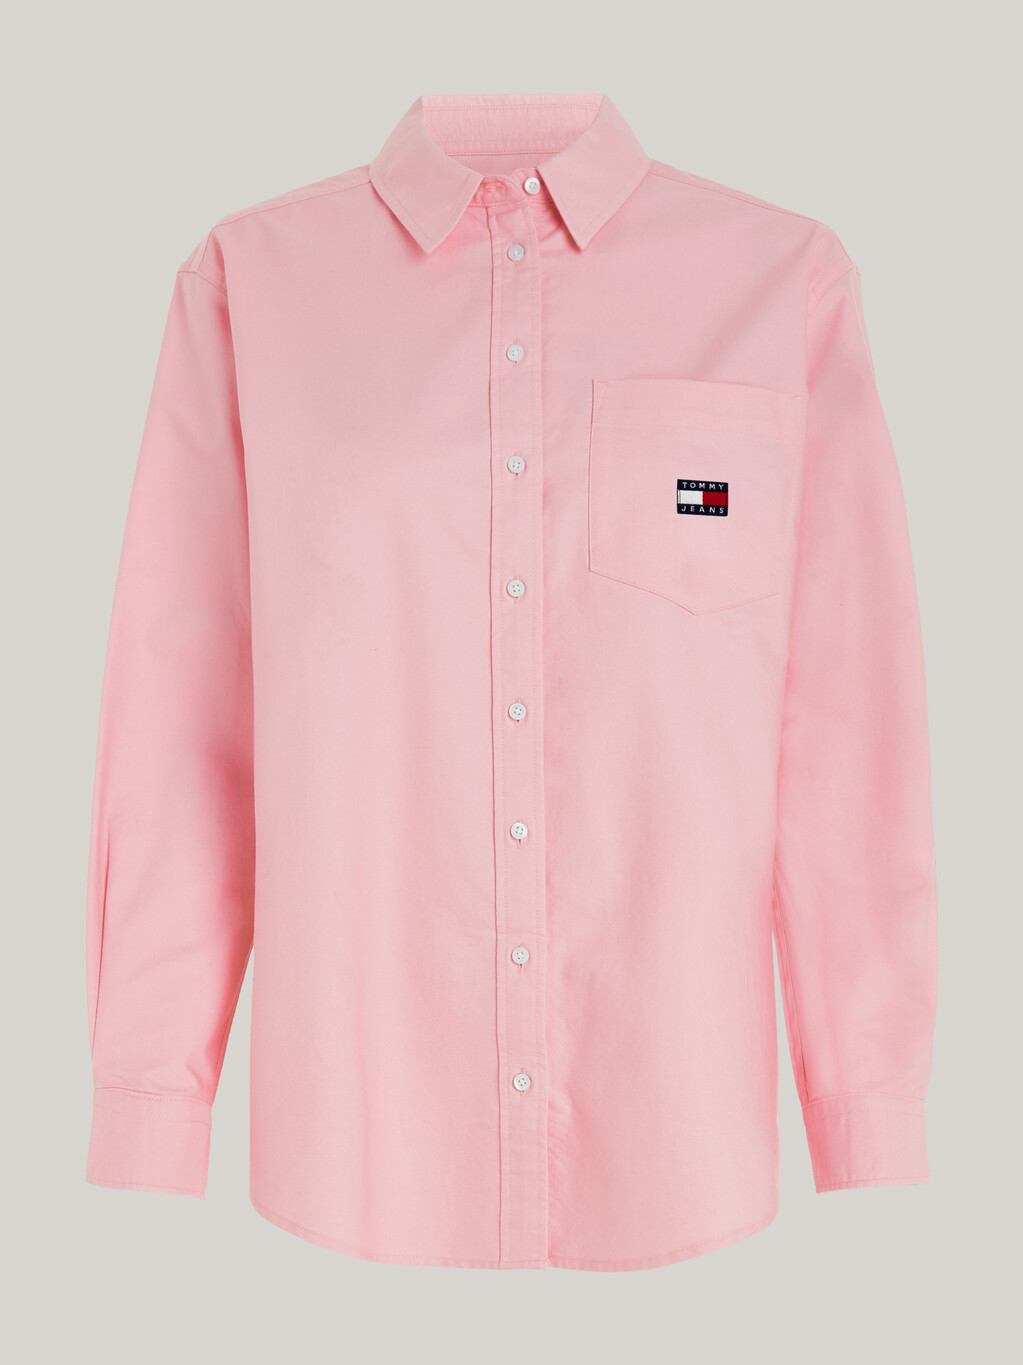 Badge Patch Pocket Boyfriend Oxford Shirt, Ballet Pink, hi-res